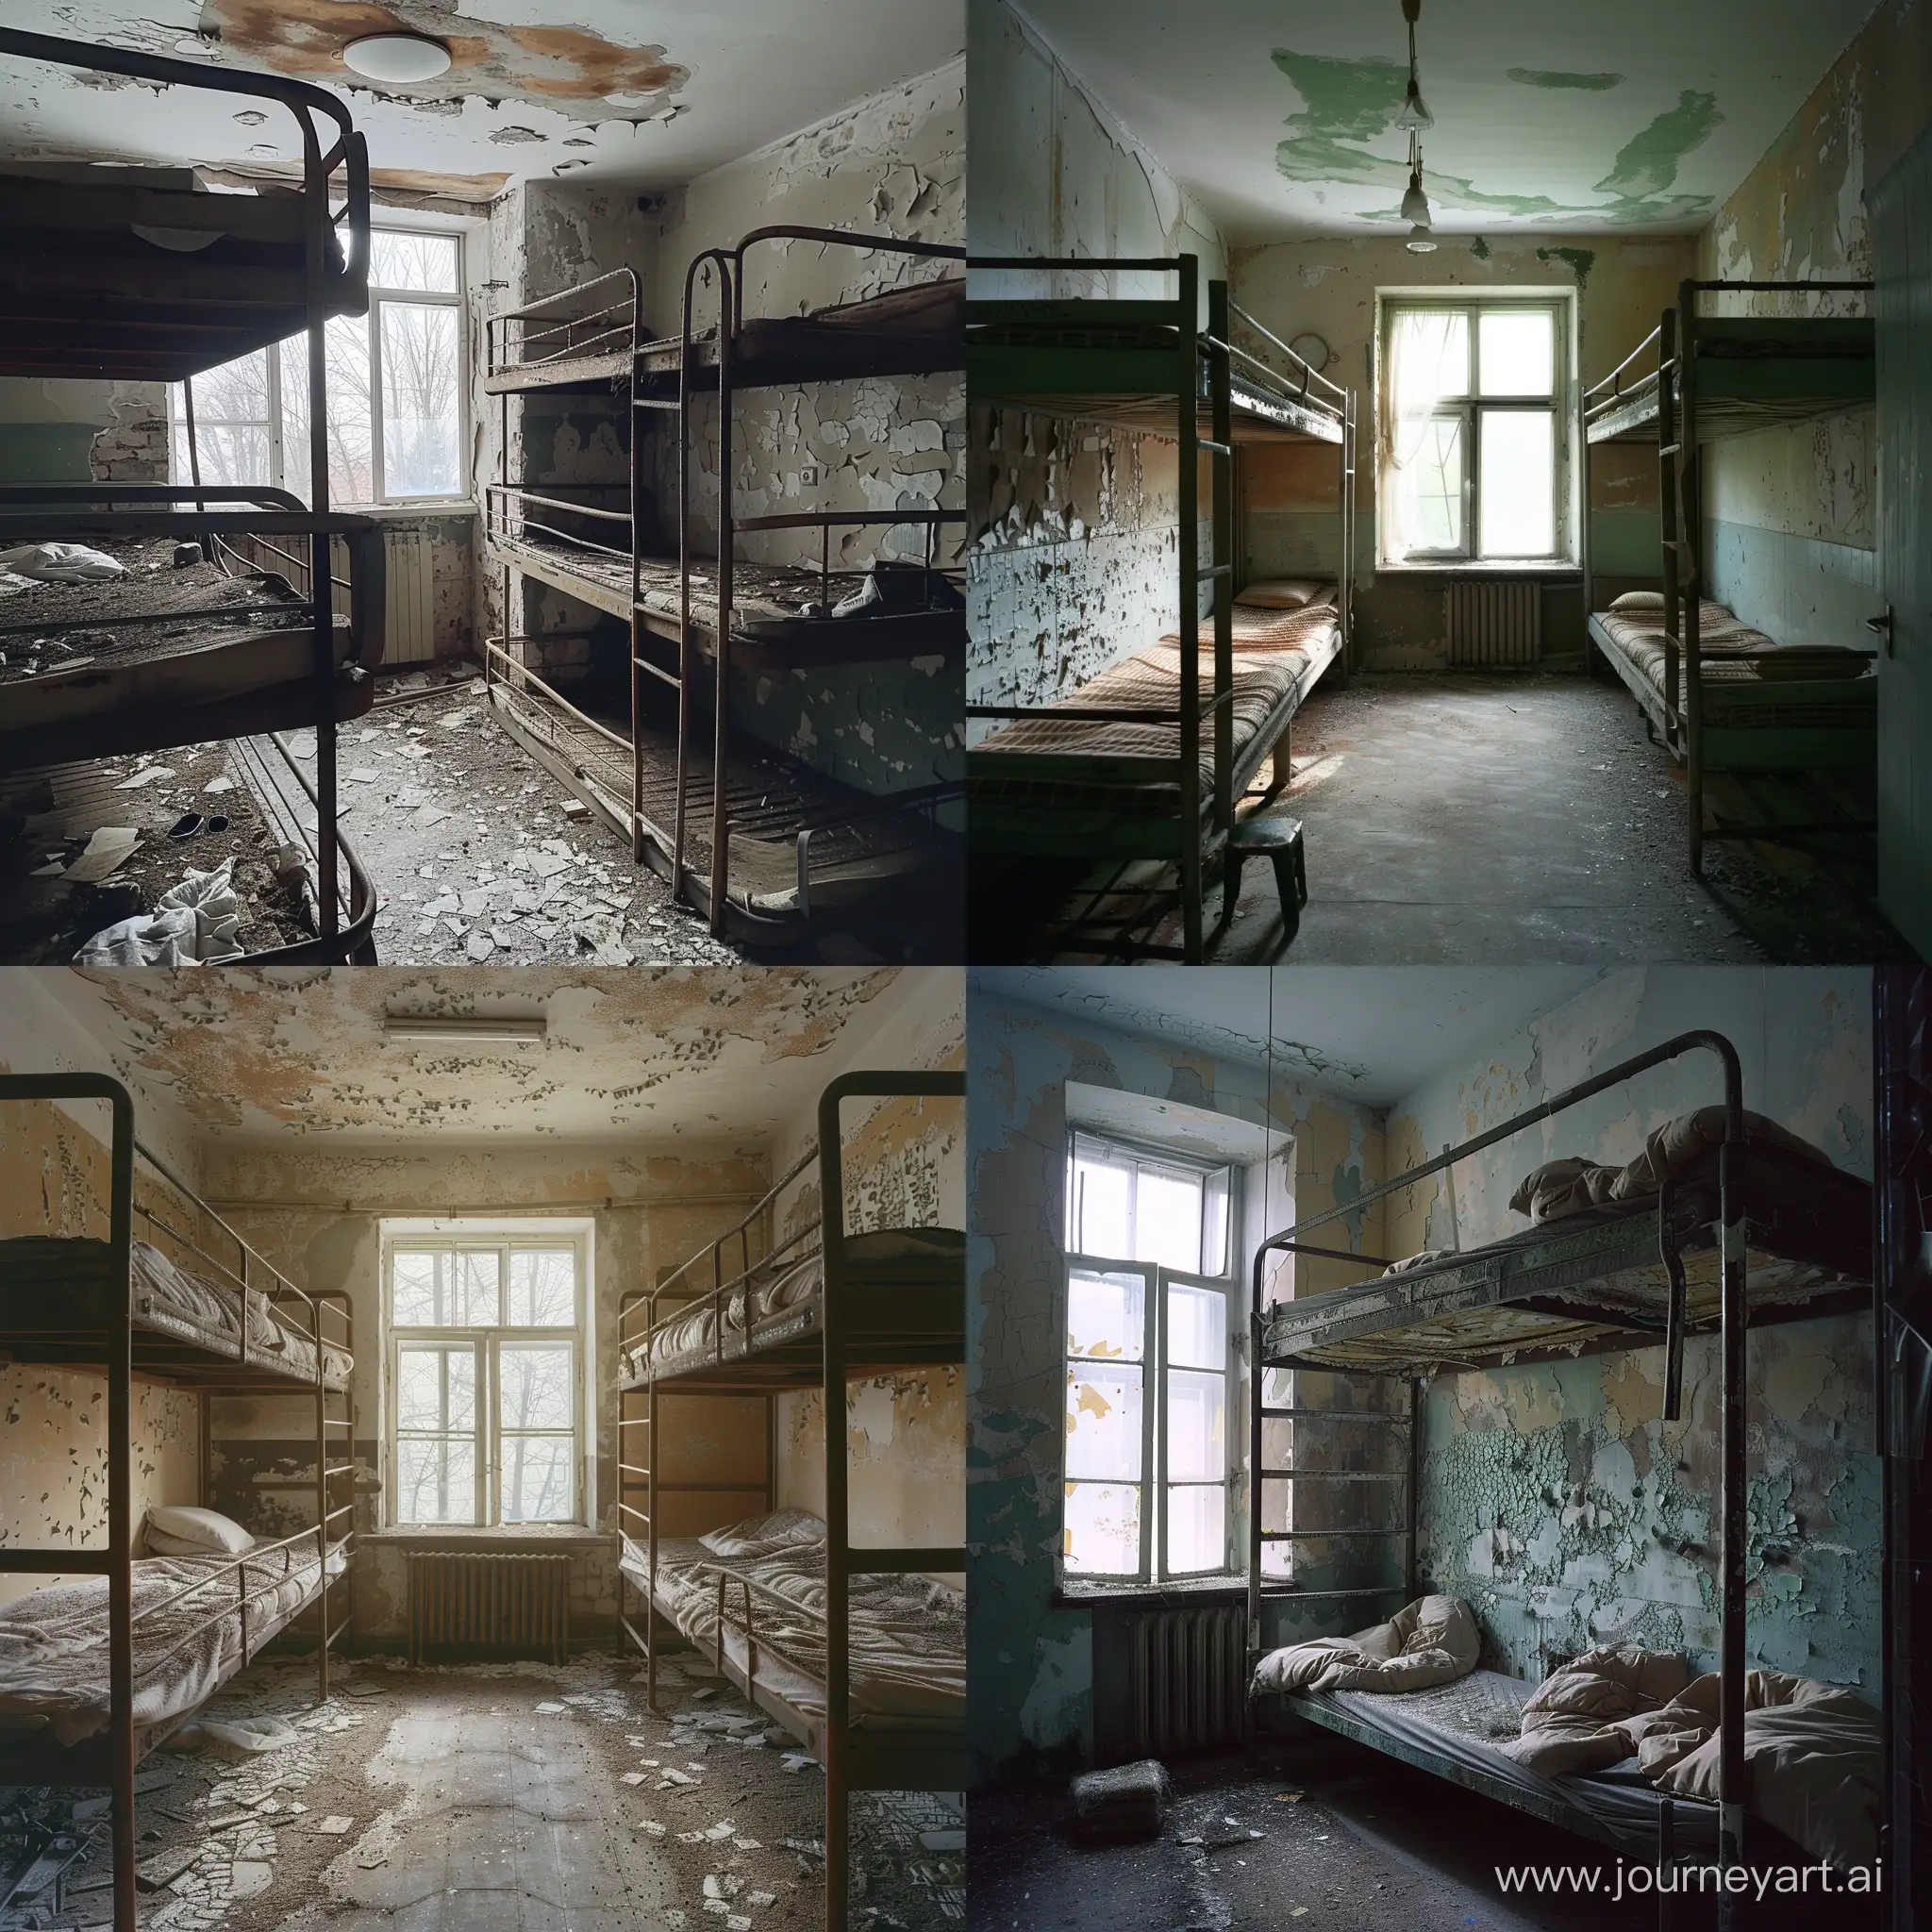 Empty-Russian-Dorm-Room-307-Desolate-Setting-with-No-Inhabitants